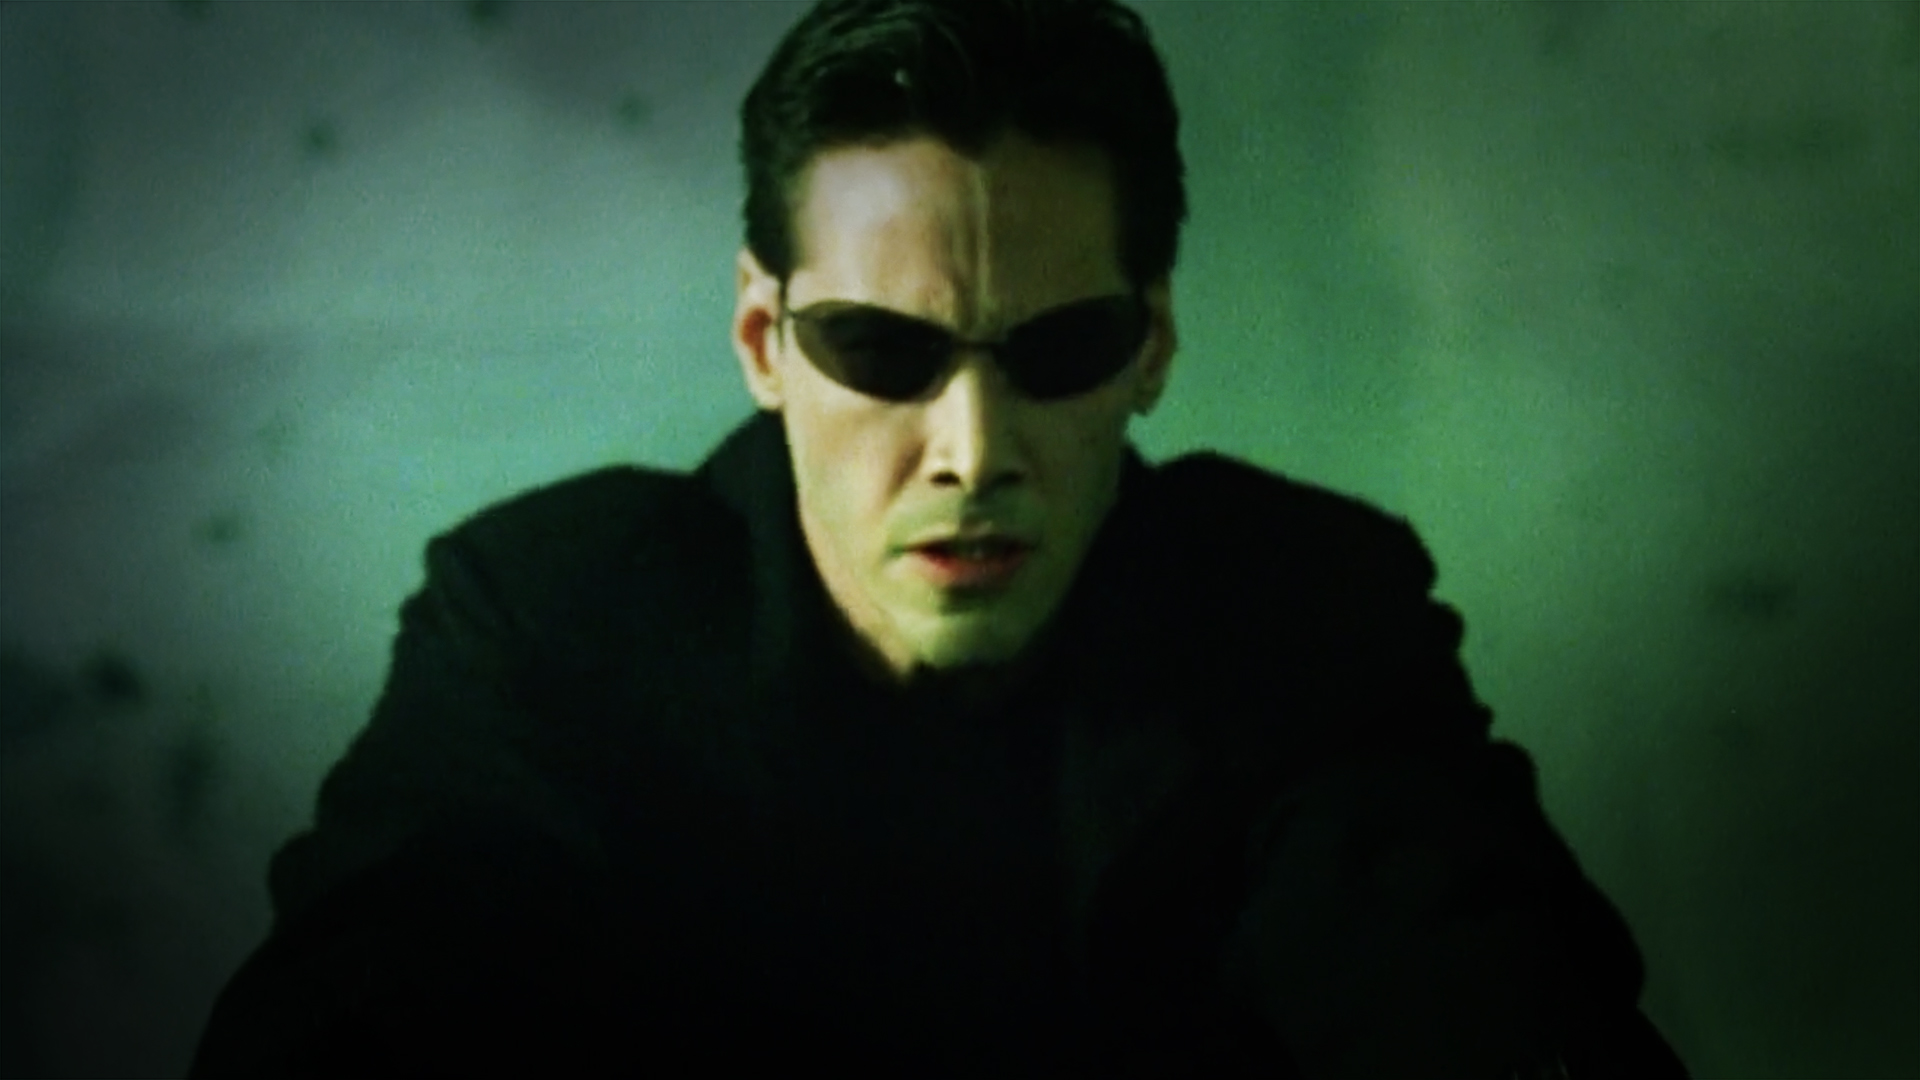 A classic slow-motion scene in “The Matrix.”